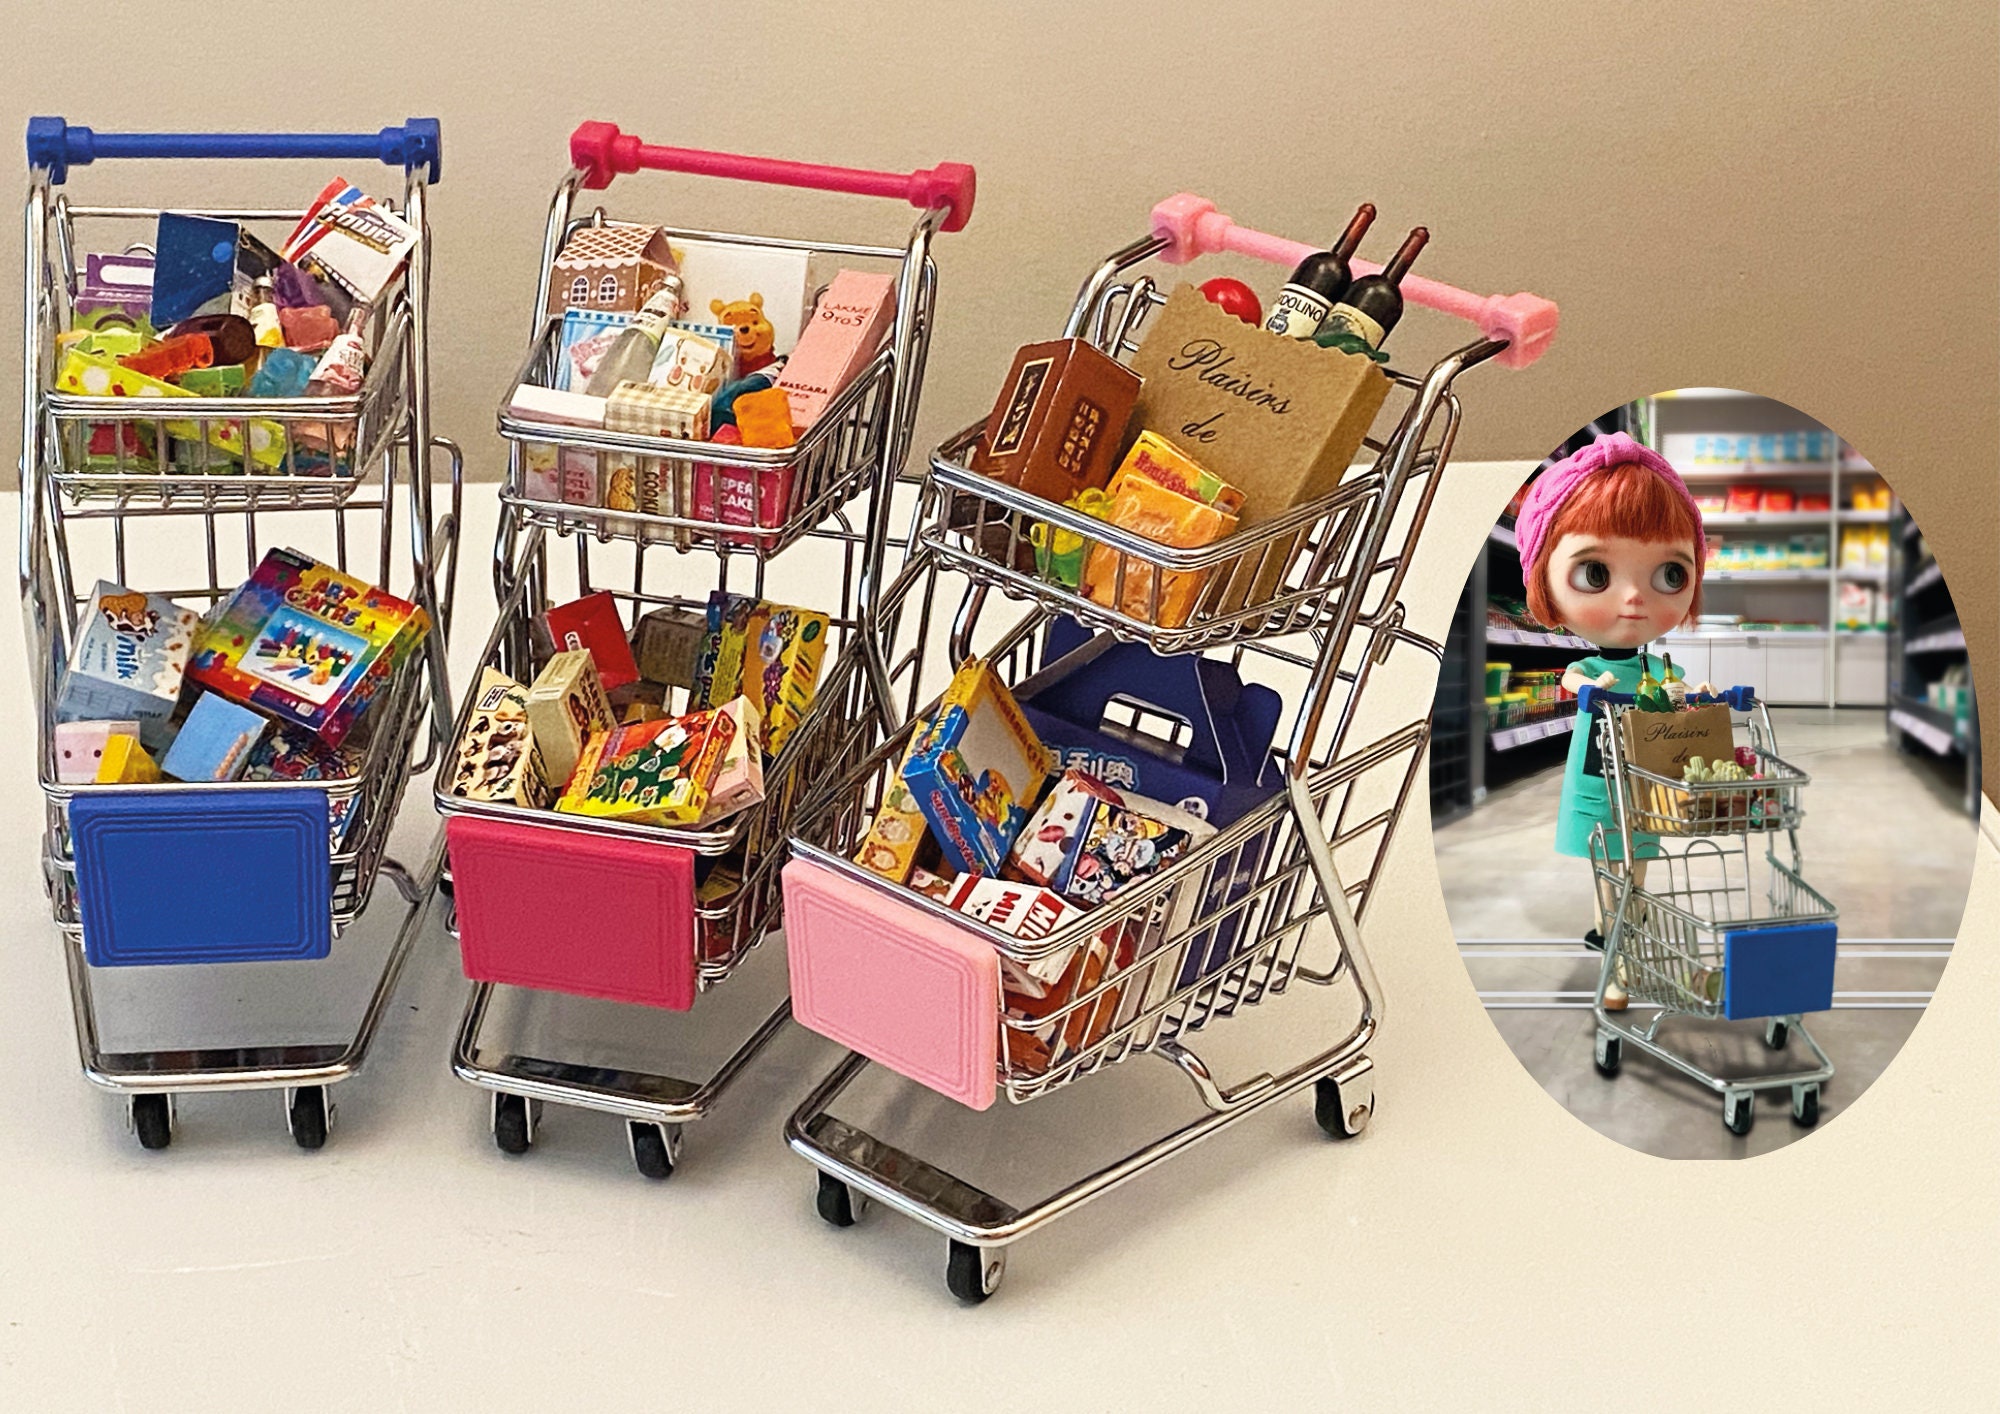 4 Pcs Mini Metal Shopping Cart, Mini Shopping Grocery Cart Supermarket  Handcart Trolley Handcart Toy Shopping Carts